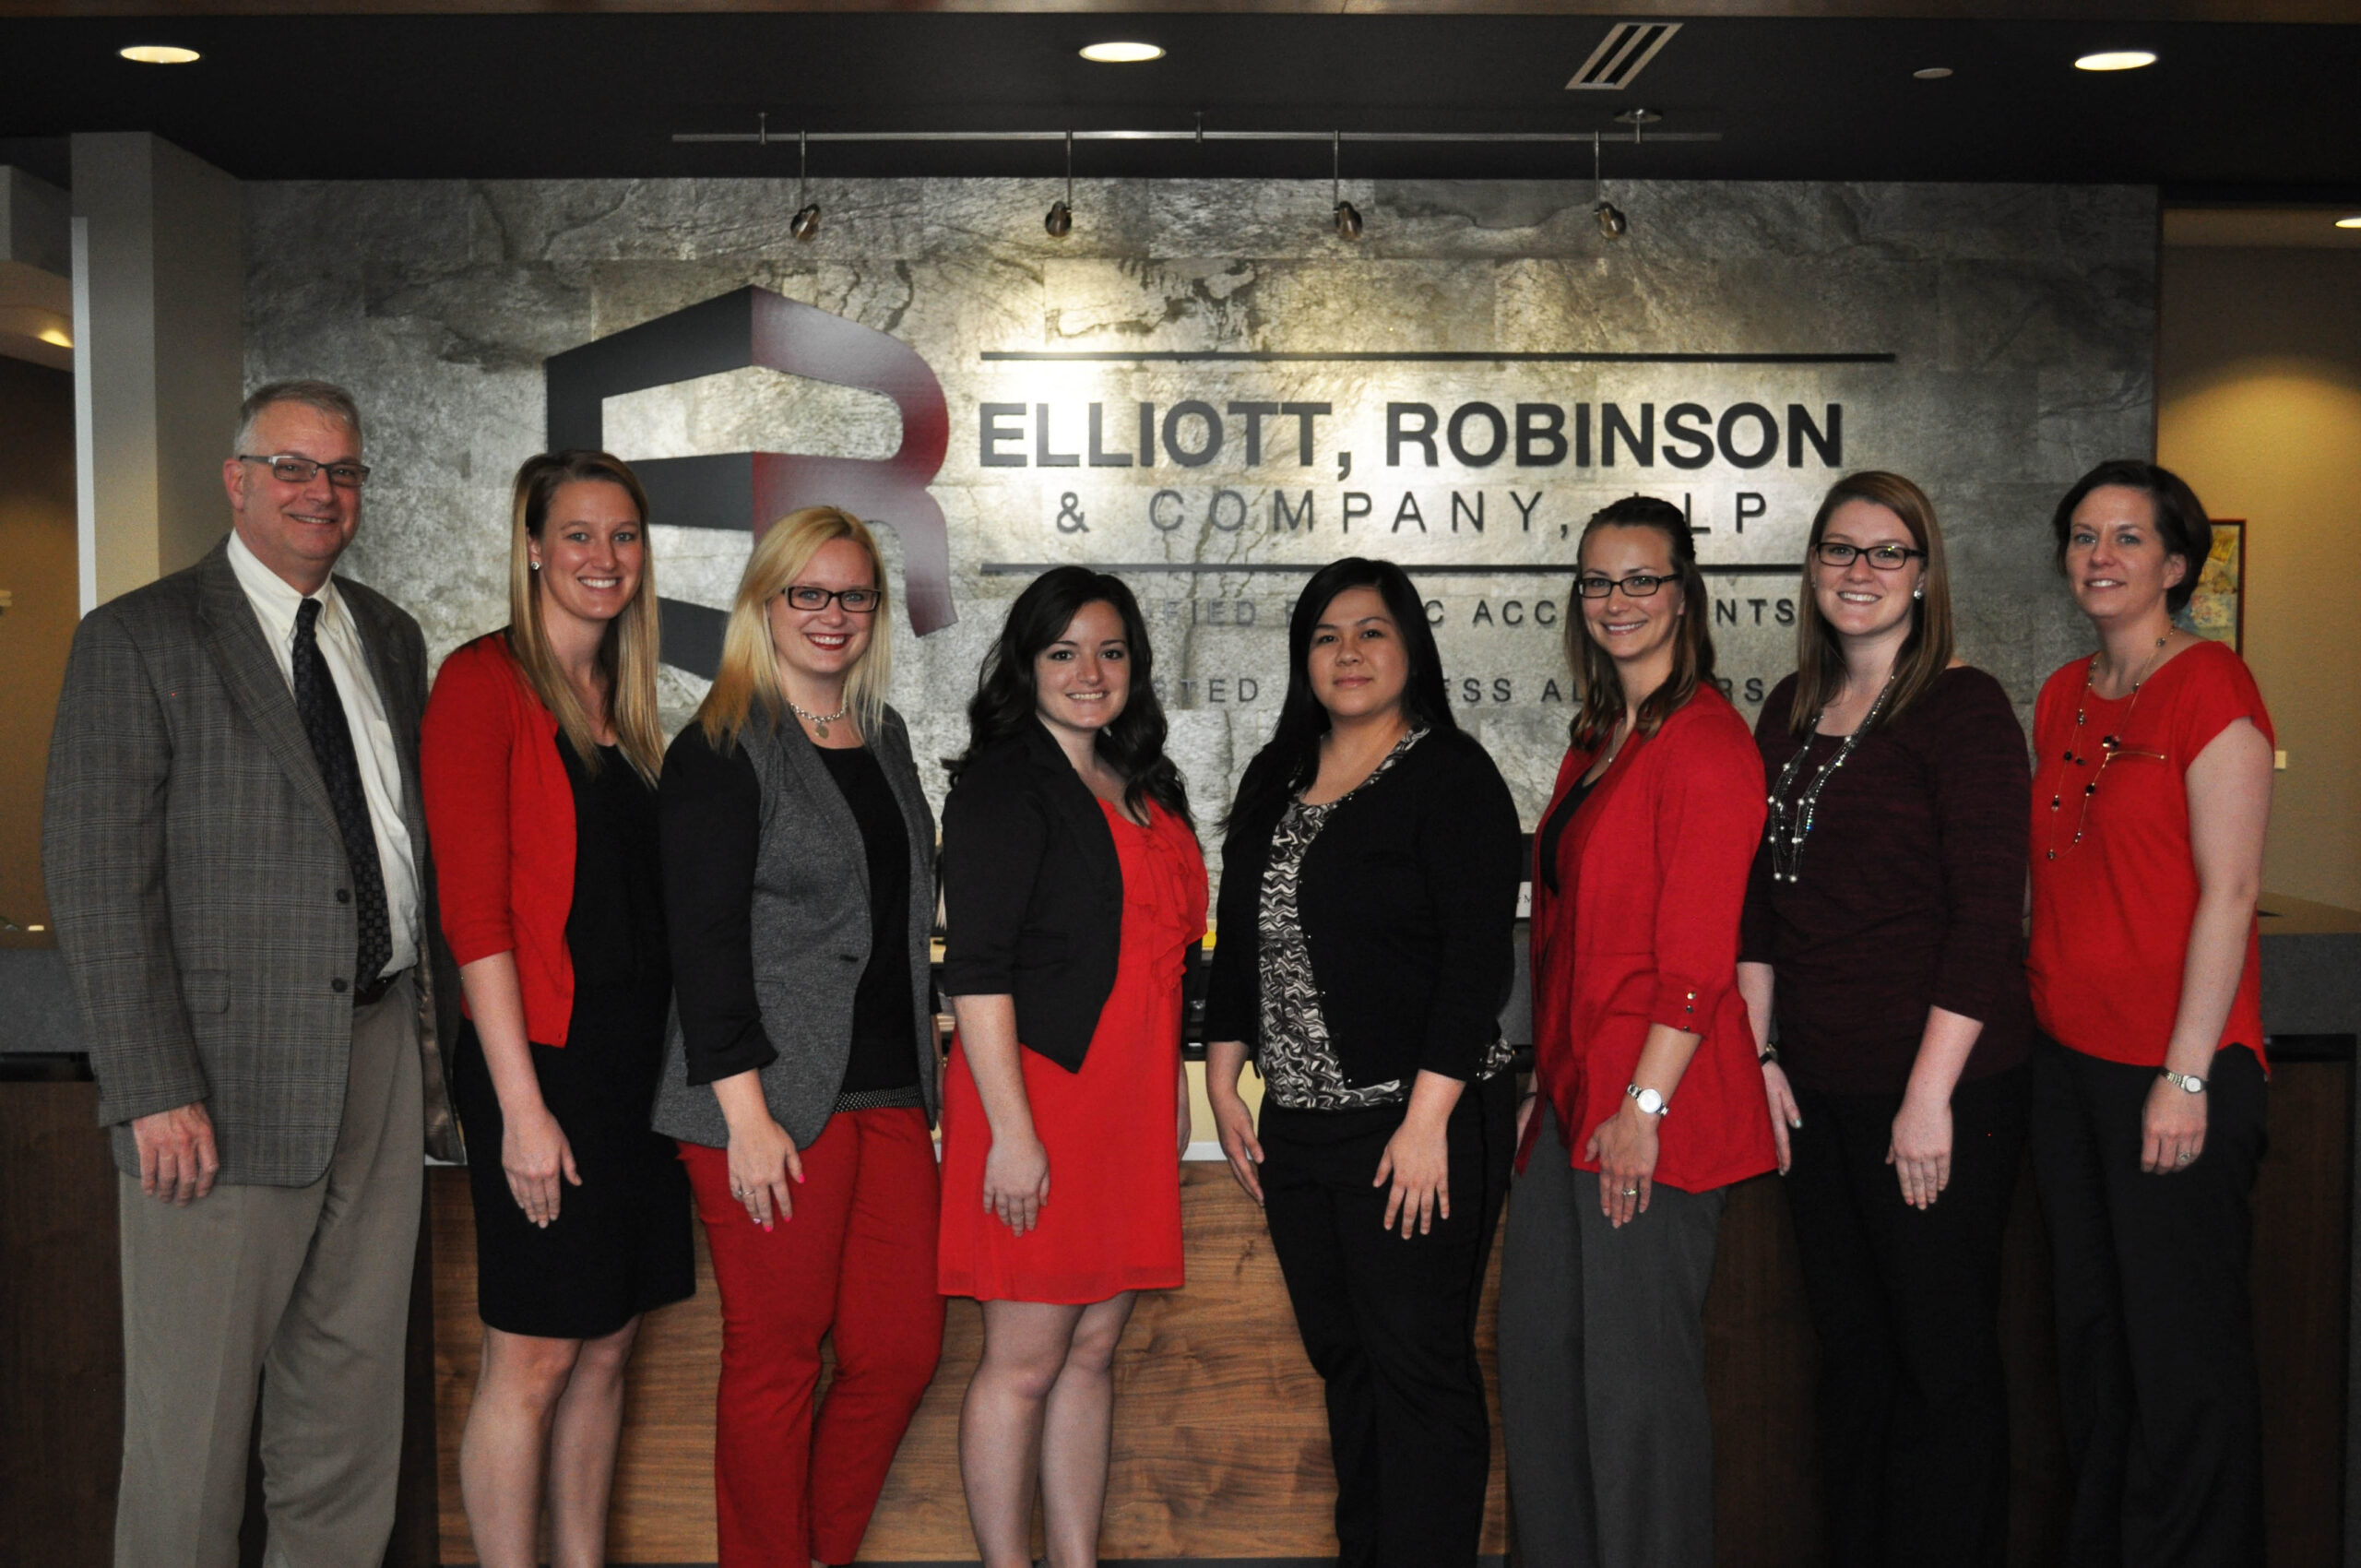 Elliott Robinson & Company Featured at Drury University